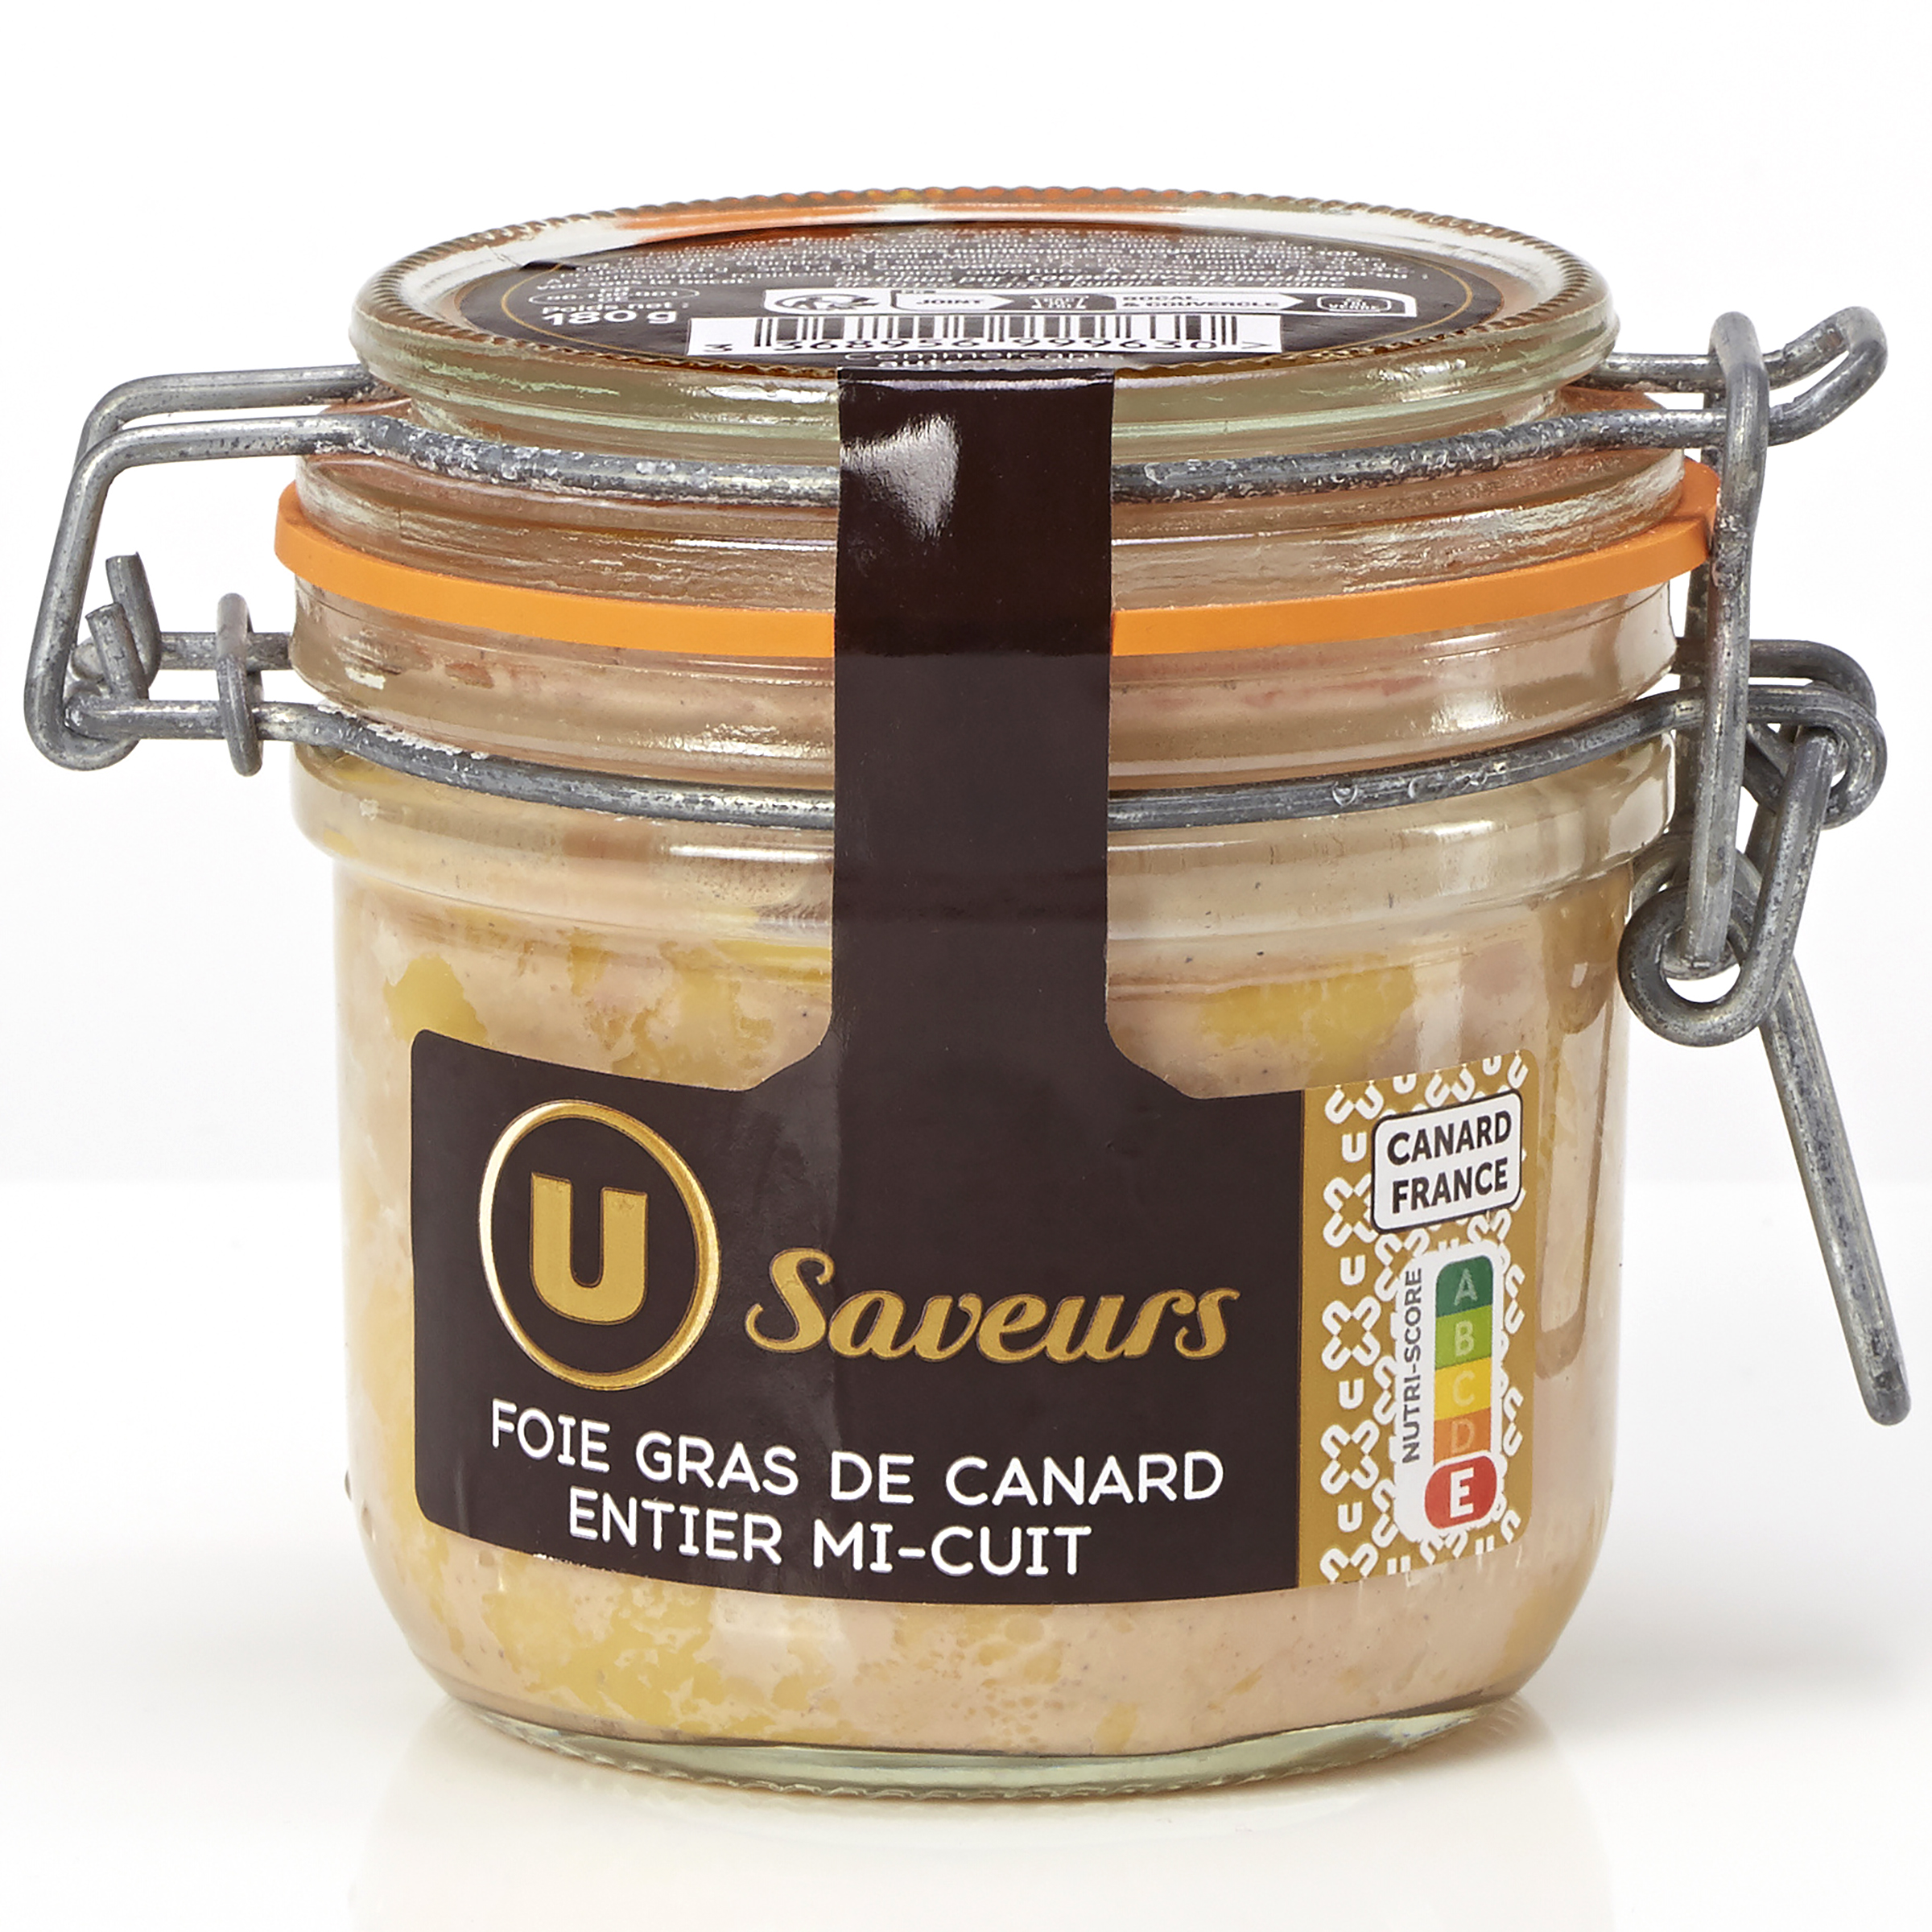 Test U Saveurs Foie gras de canard entier mi-cuit - foie gras